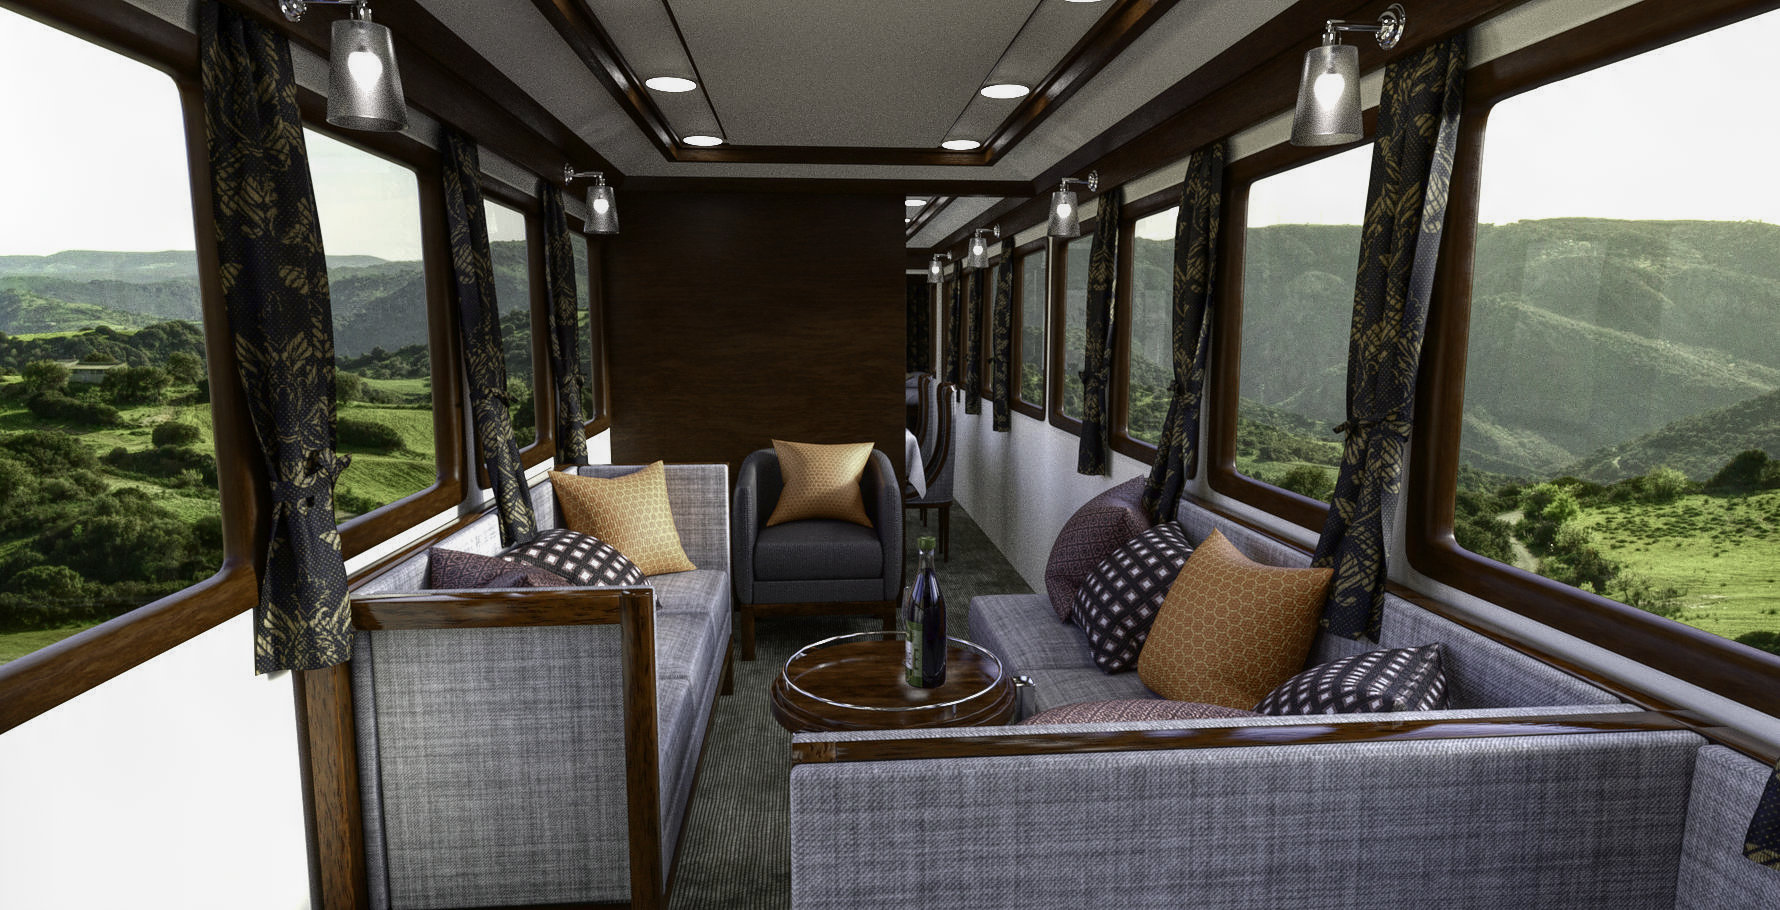 FG Luxury Passenger Train by: PAN StudiosFugazi1968ironman13, 3D Models by Daz 3D